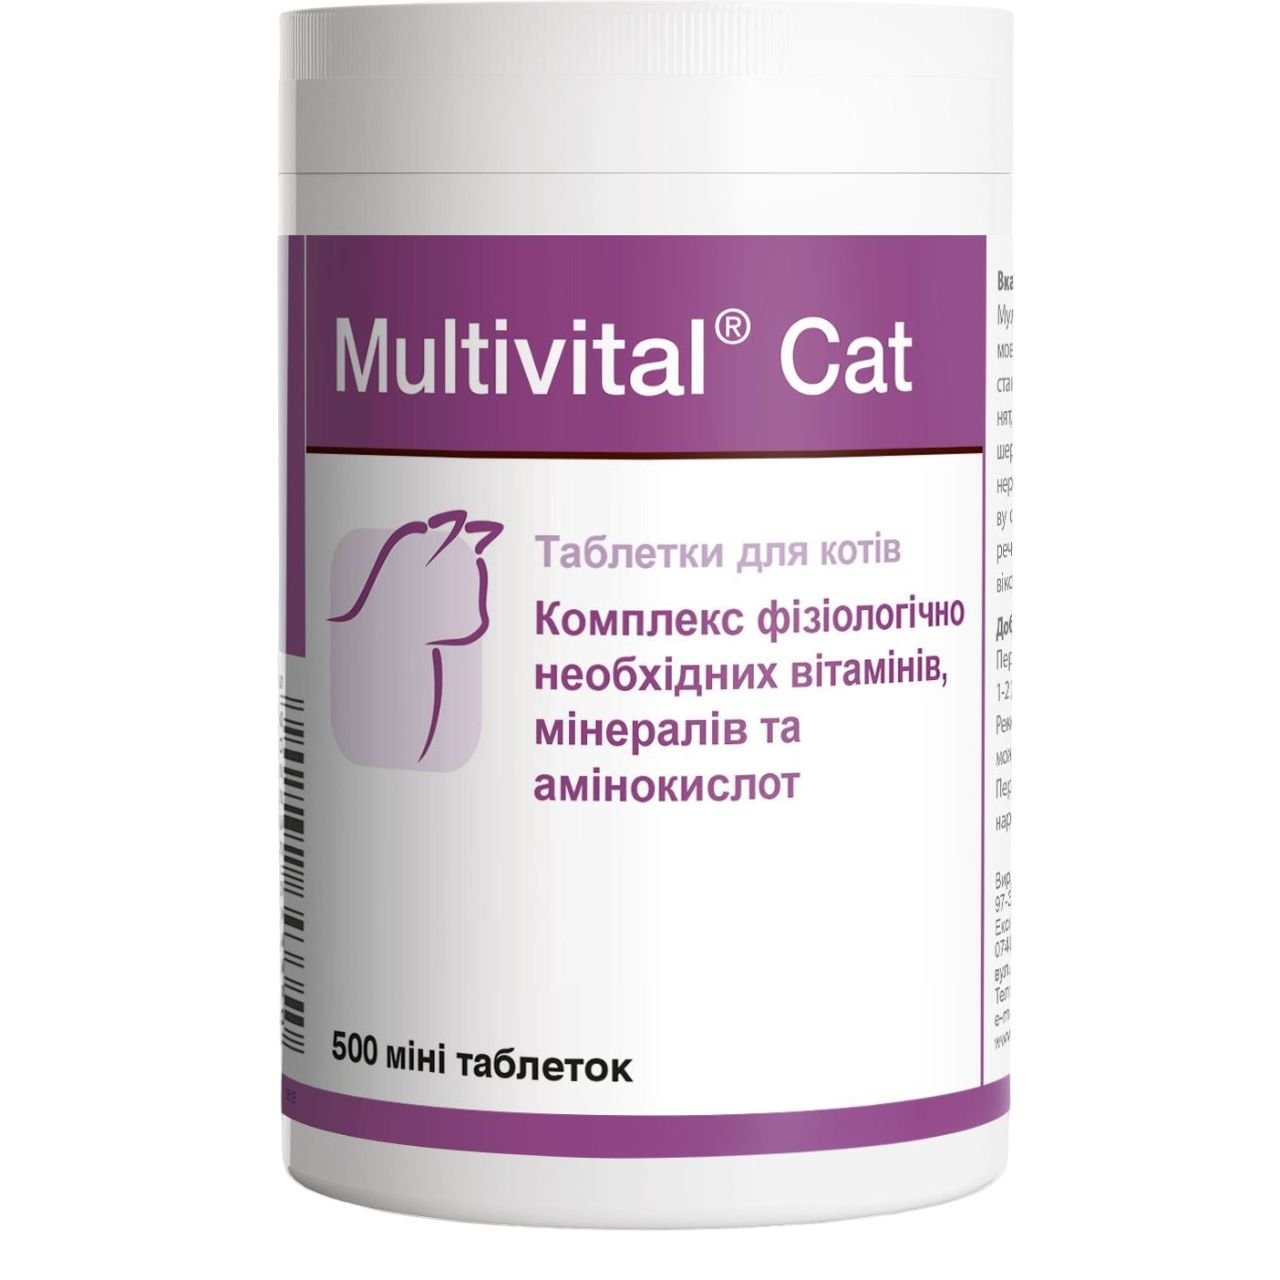 Витаминно-минеральная добавка Dolfos Multivital Cat, 500 мини таблеток (190-500) - фото 1